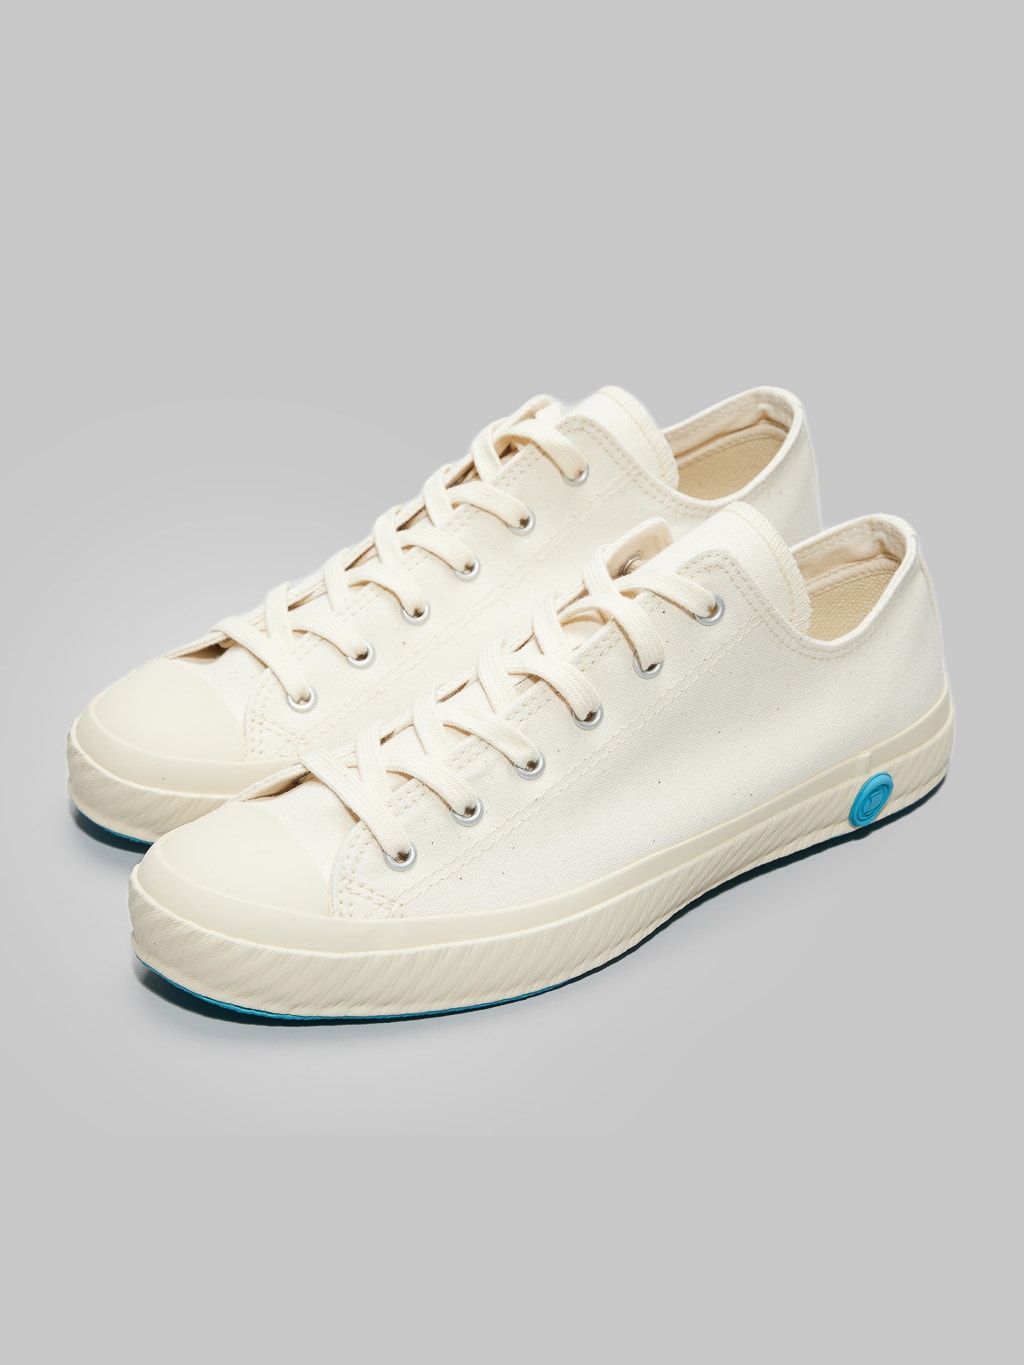 Shoes Like Pottery 01JP Low Sneaker White